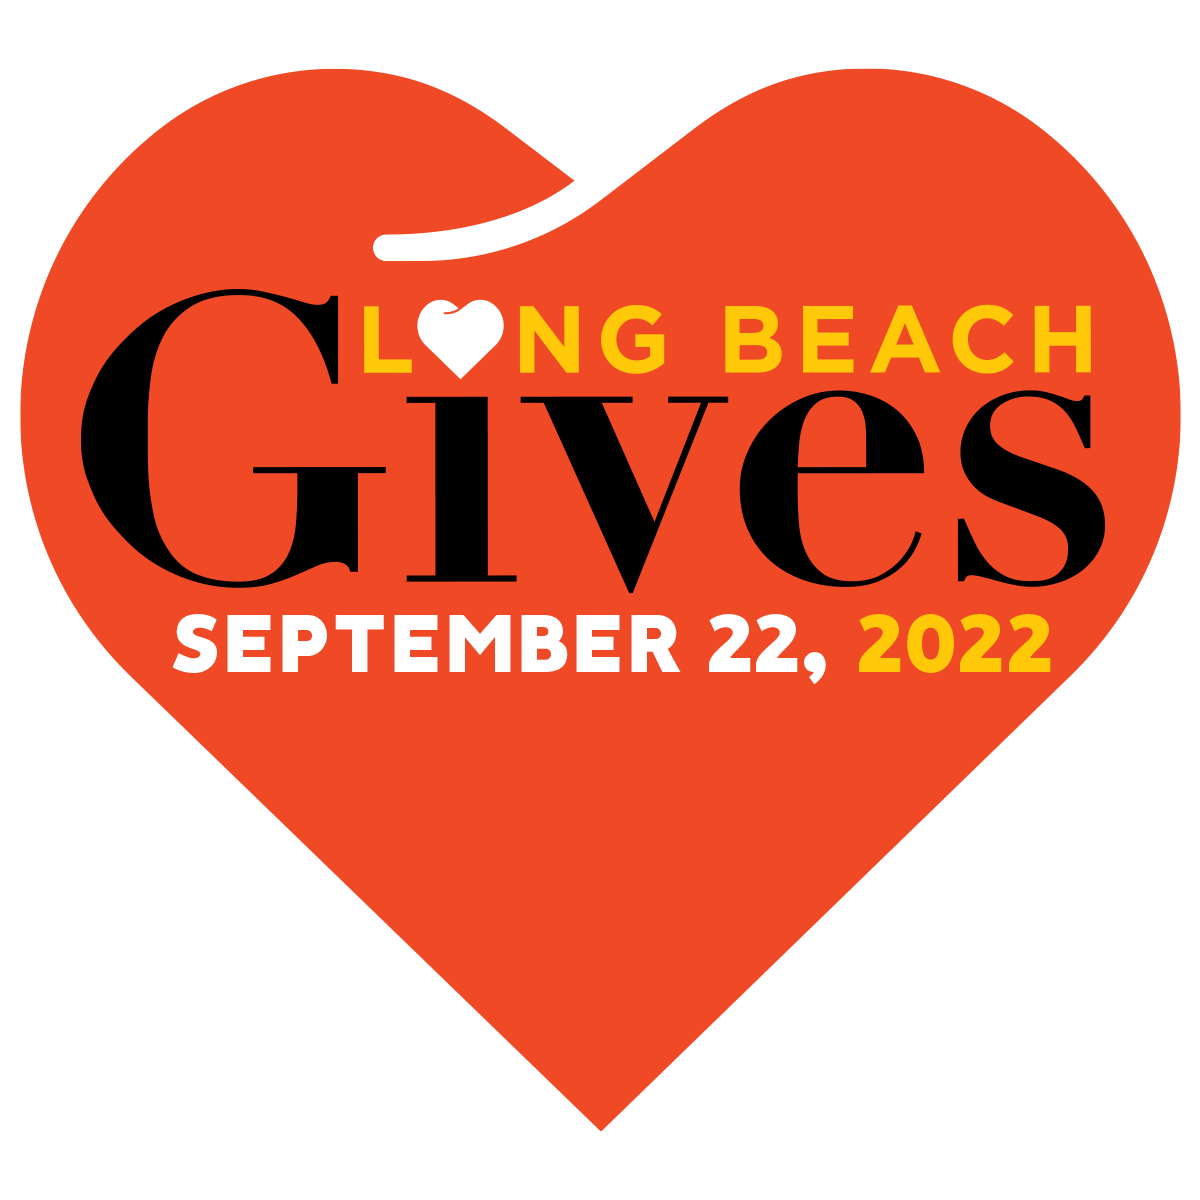 Long Beach Gives September 22, 2022